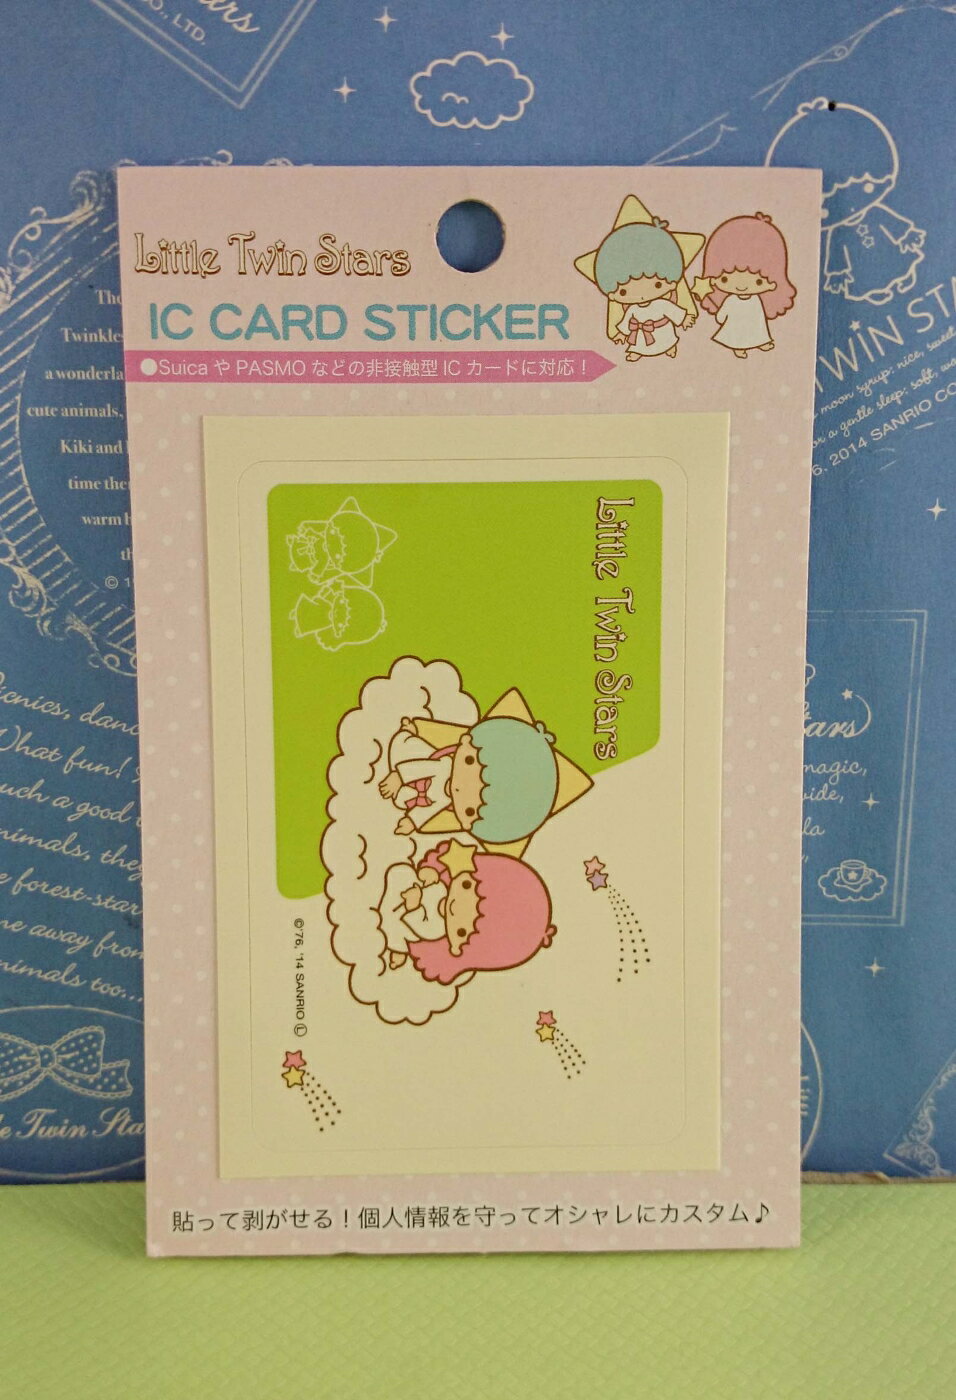 【震撼精品百貨】Little Twin Stars KiKi&LaLa 雙子星小天使 卡片貼紙 綠 震撼日式精品百貨